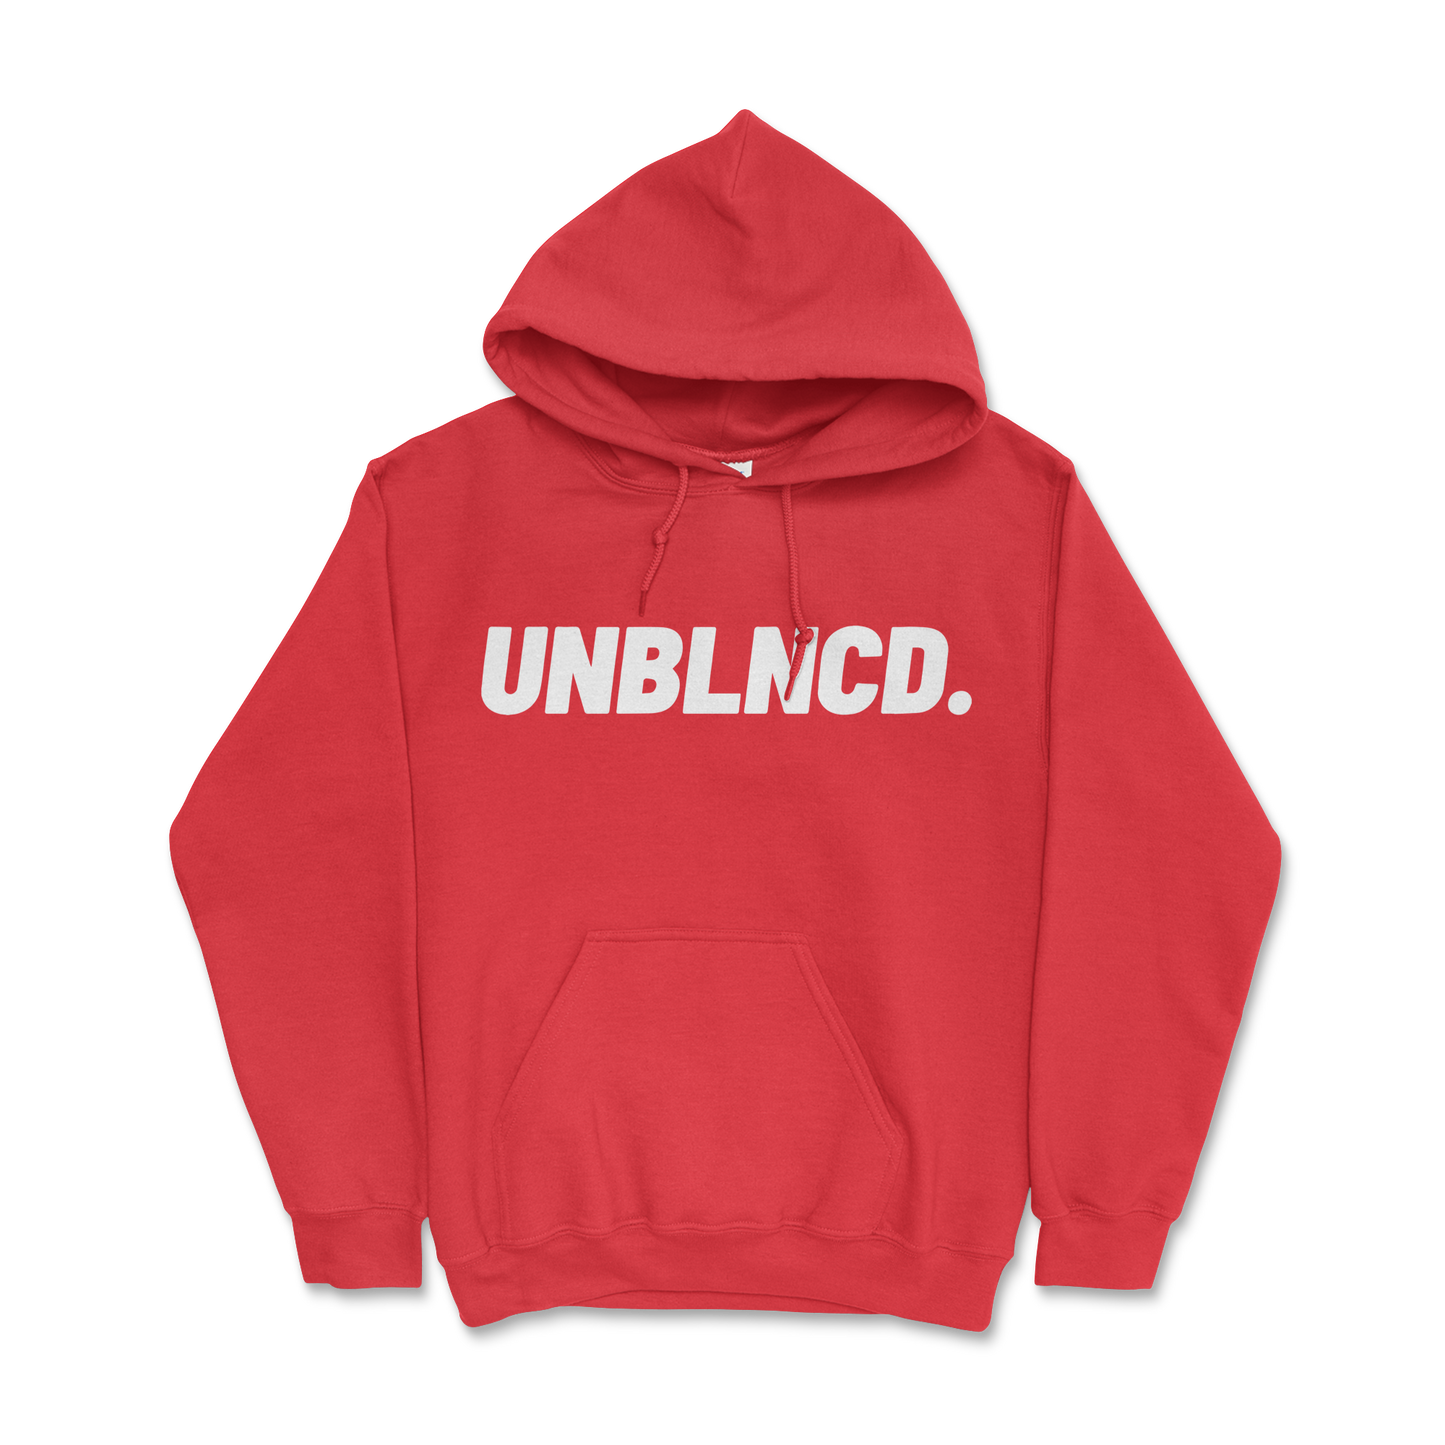 Red Valentine “Unblncd” hoodie